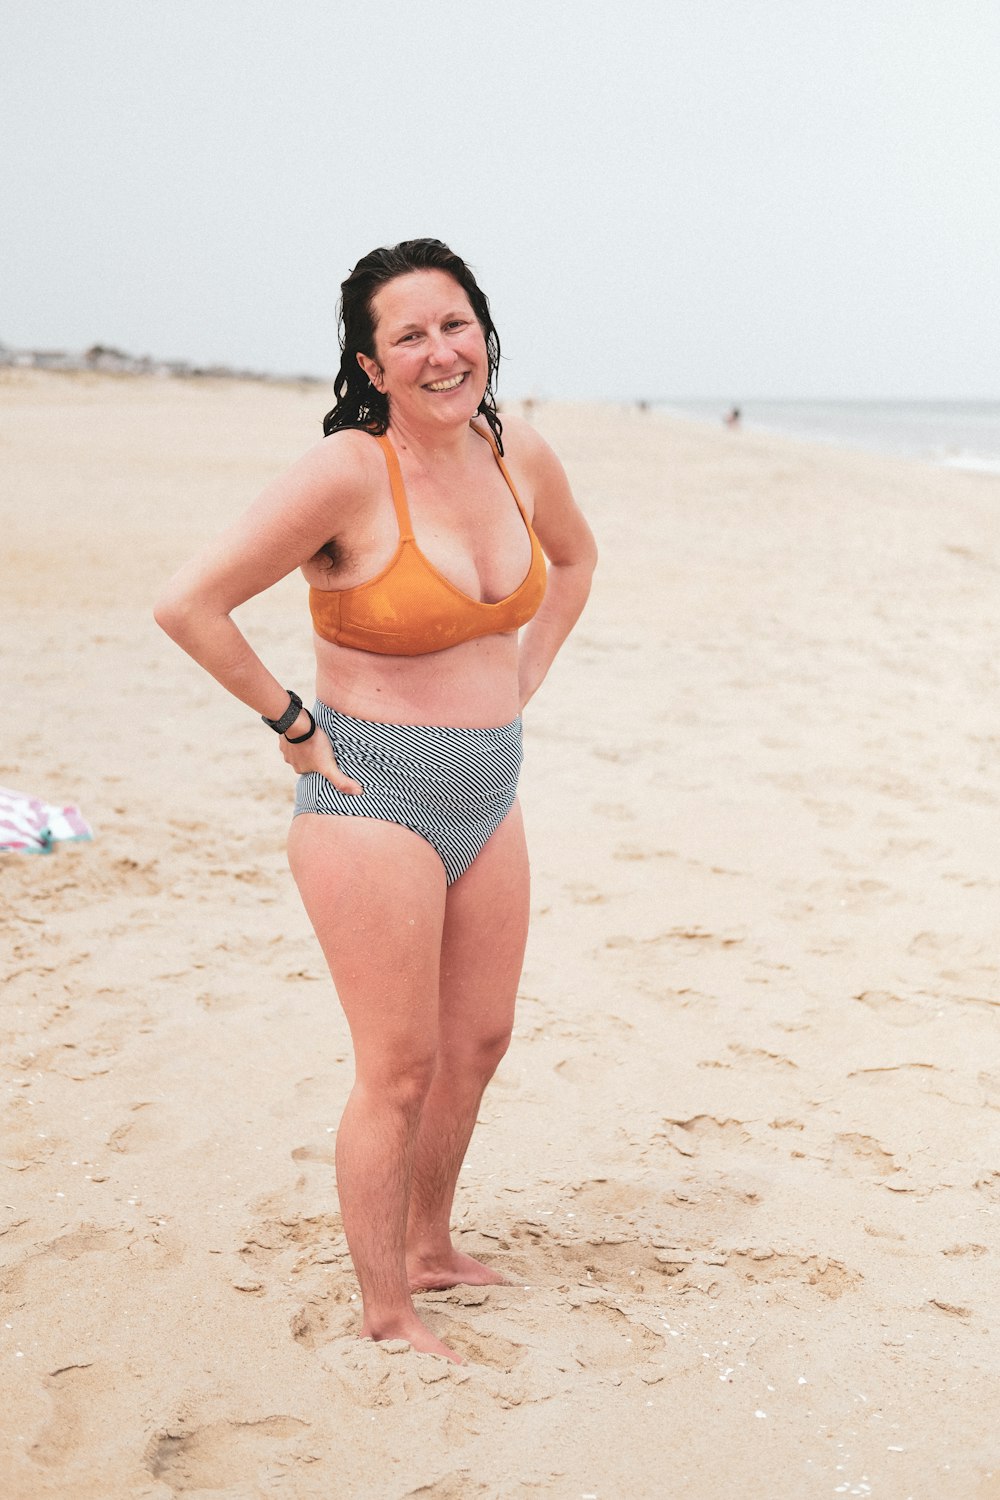 woman in black and white polka dot bikini posing on beach during daytime